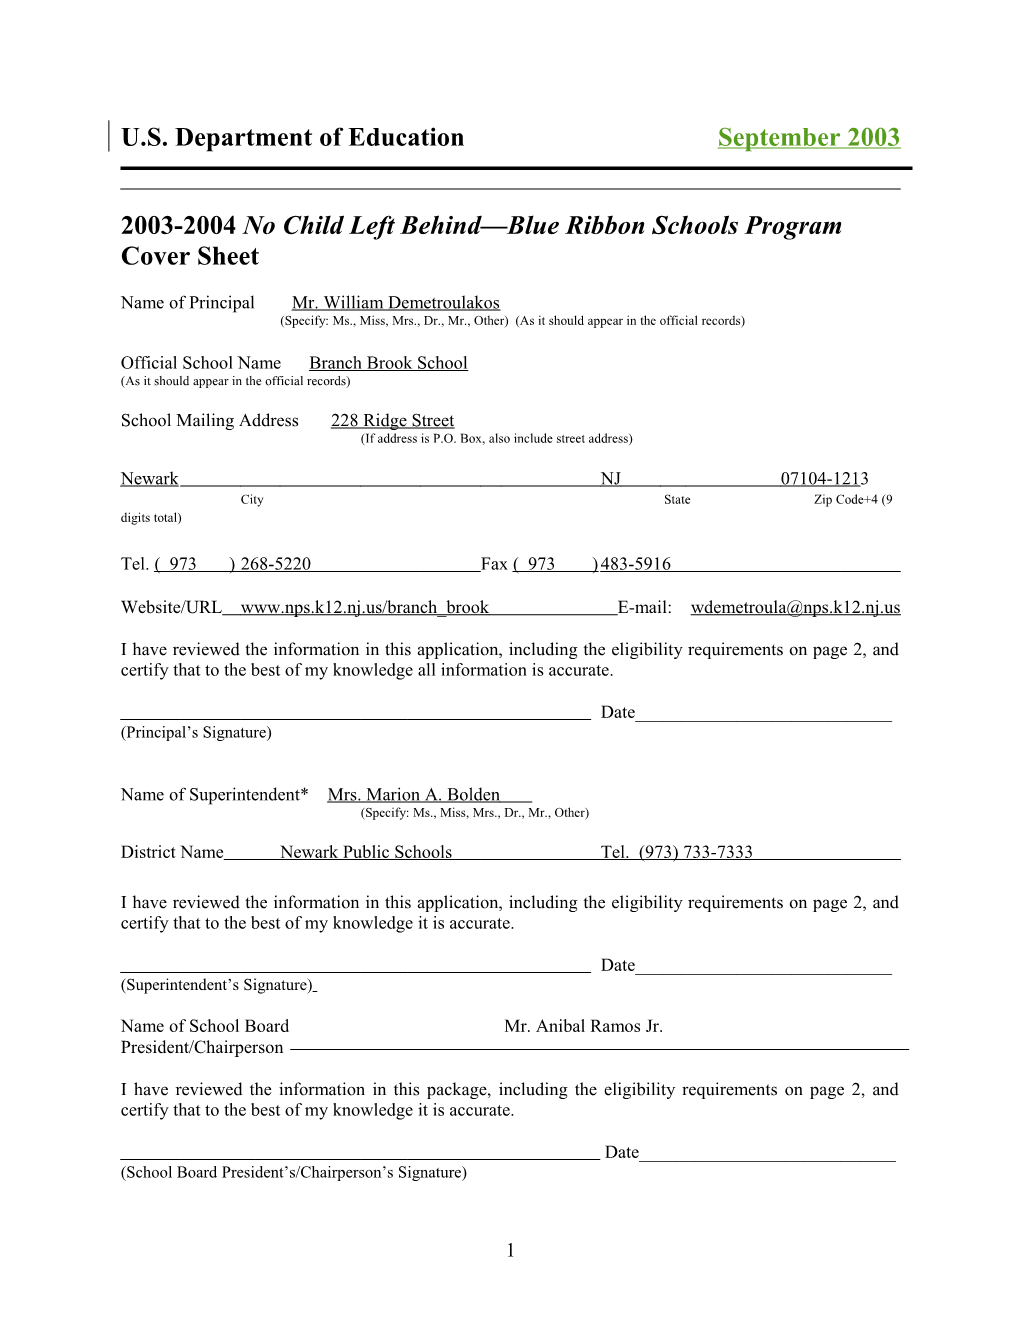 Branch Brook Elementary School 2004 No Child Left Behind-Blue Ribbon School Application (Msword)